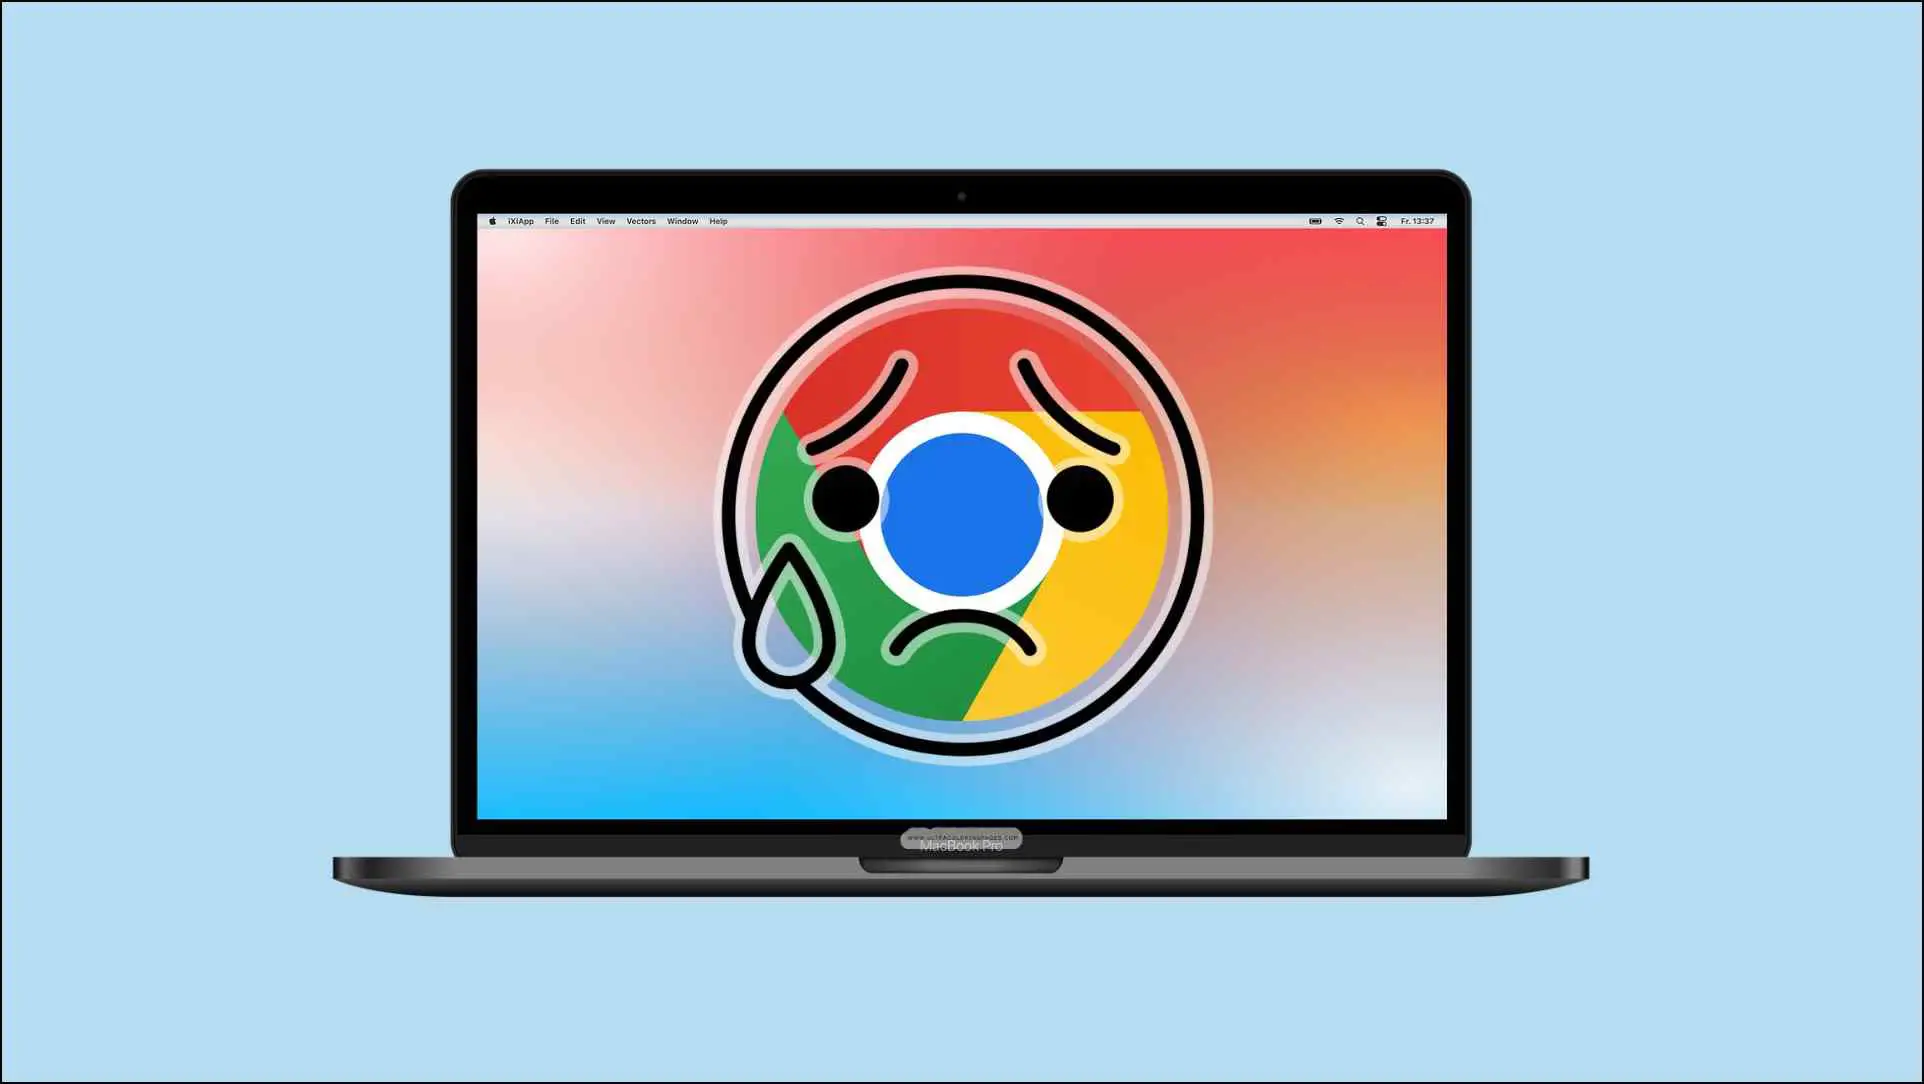  Chrome Running Slow on Mac